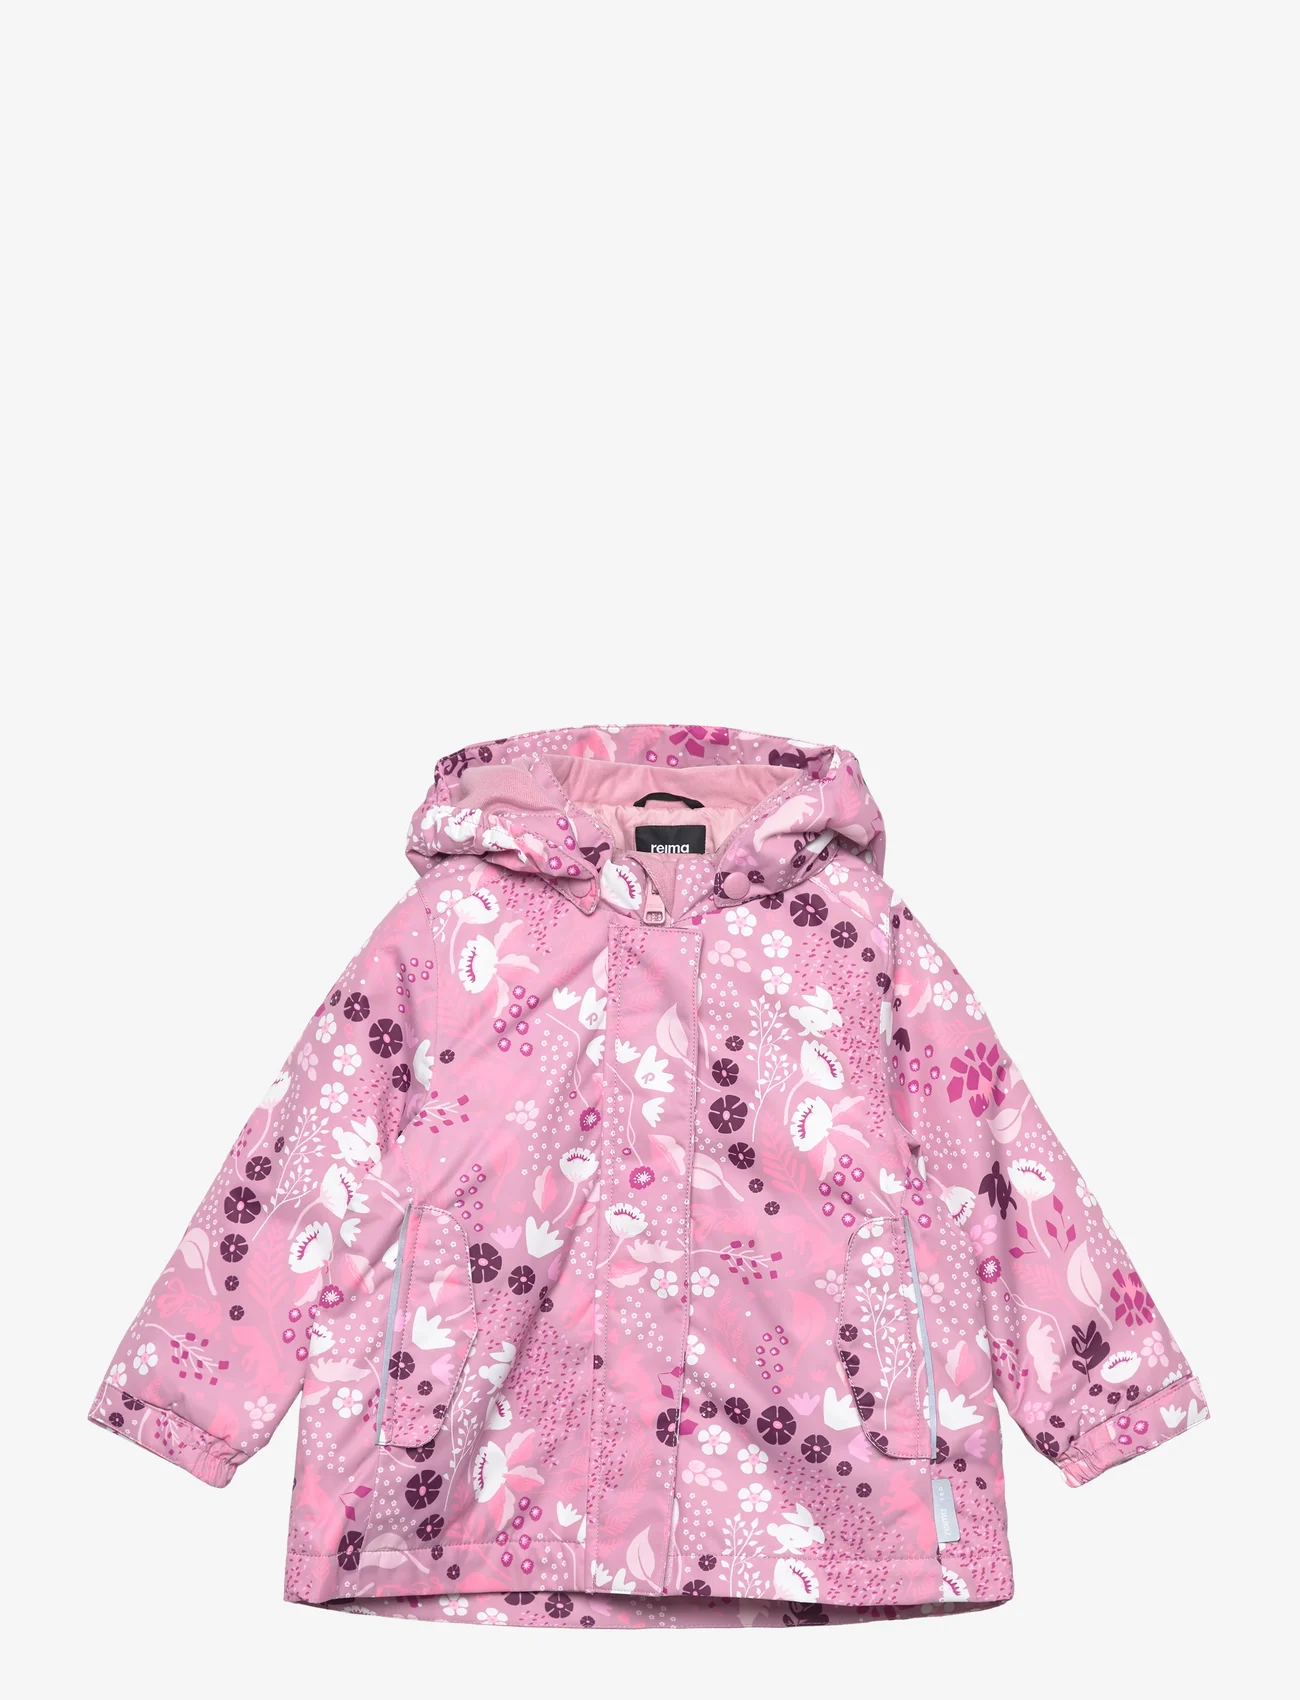 Reima - Toddlers' winter jacket Kuhmoinen - shelljacke - grey pink - 0